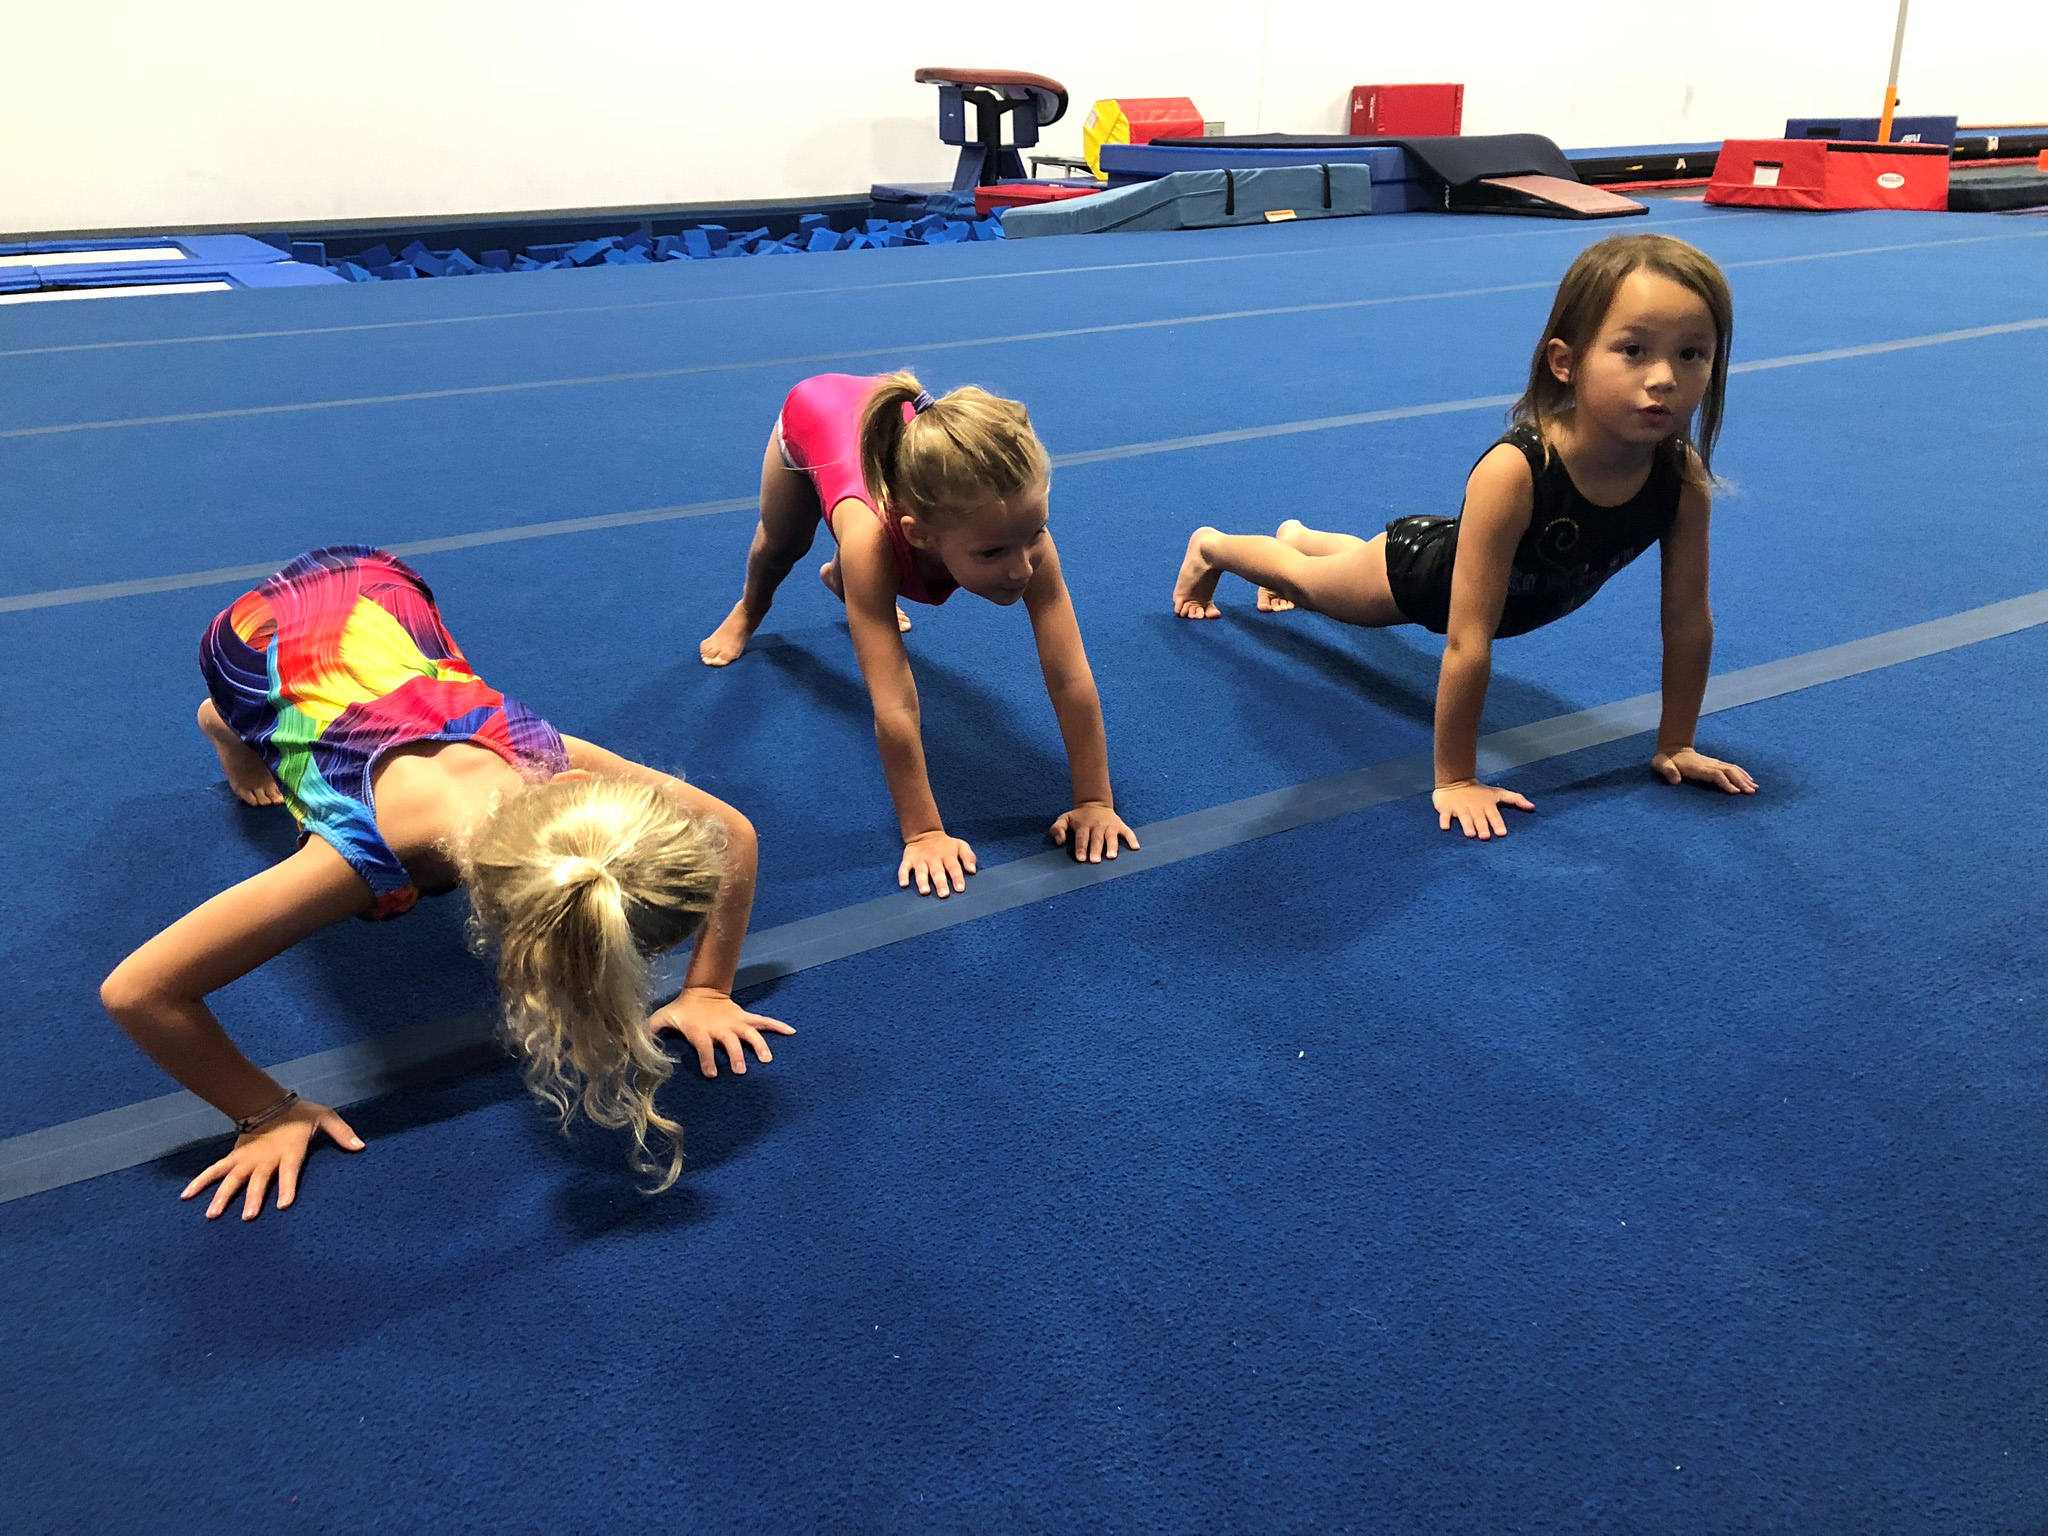 Children doing gymnastics poses